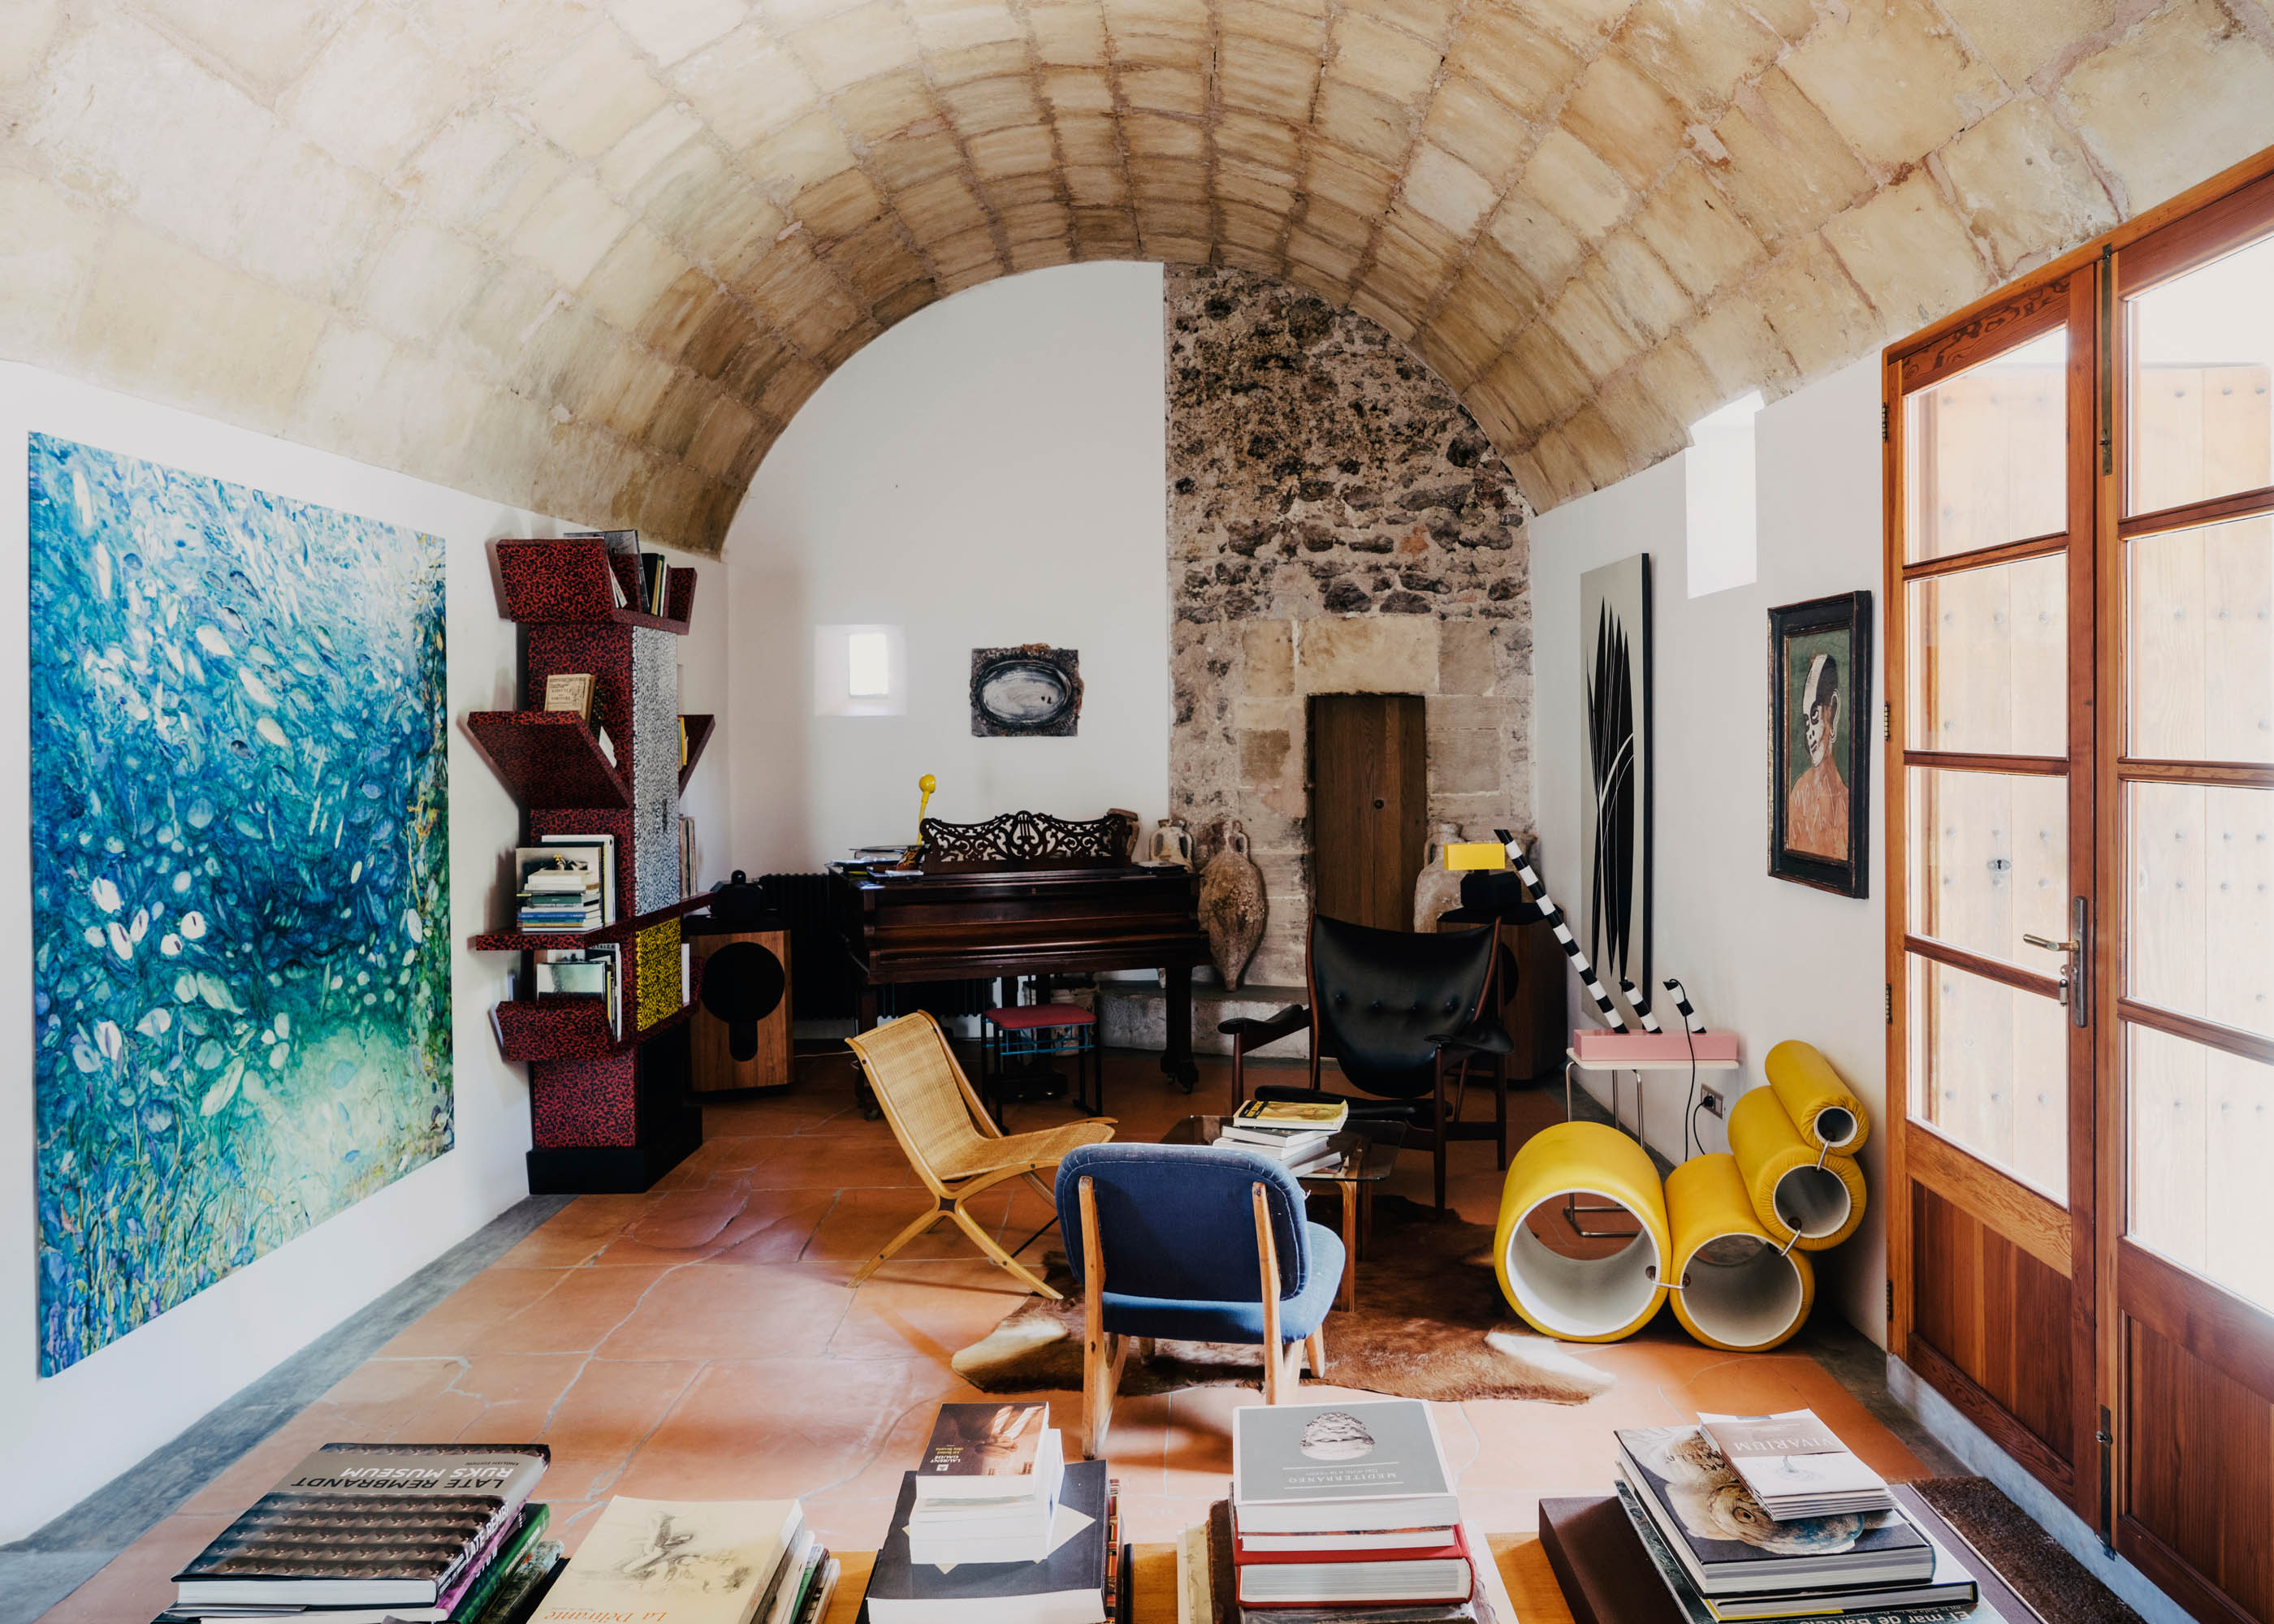 #interiors #miquel #barcelo #artist #spain #mallorca #editorial #wallstreetjournal